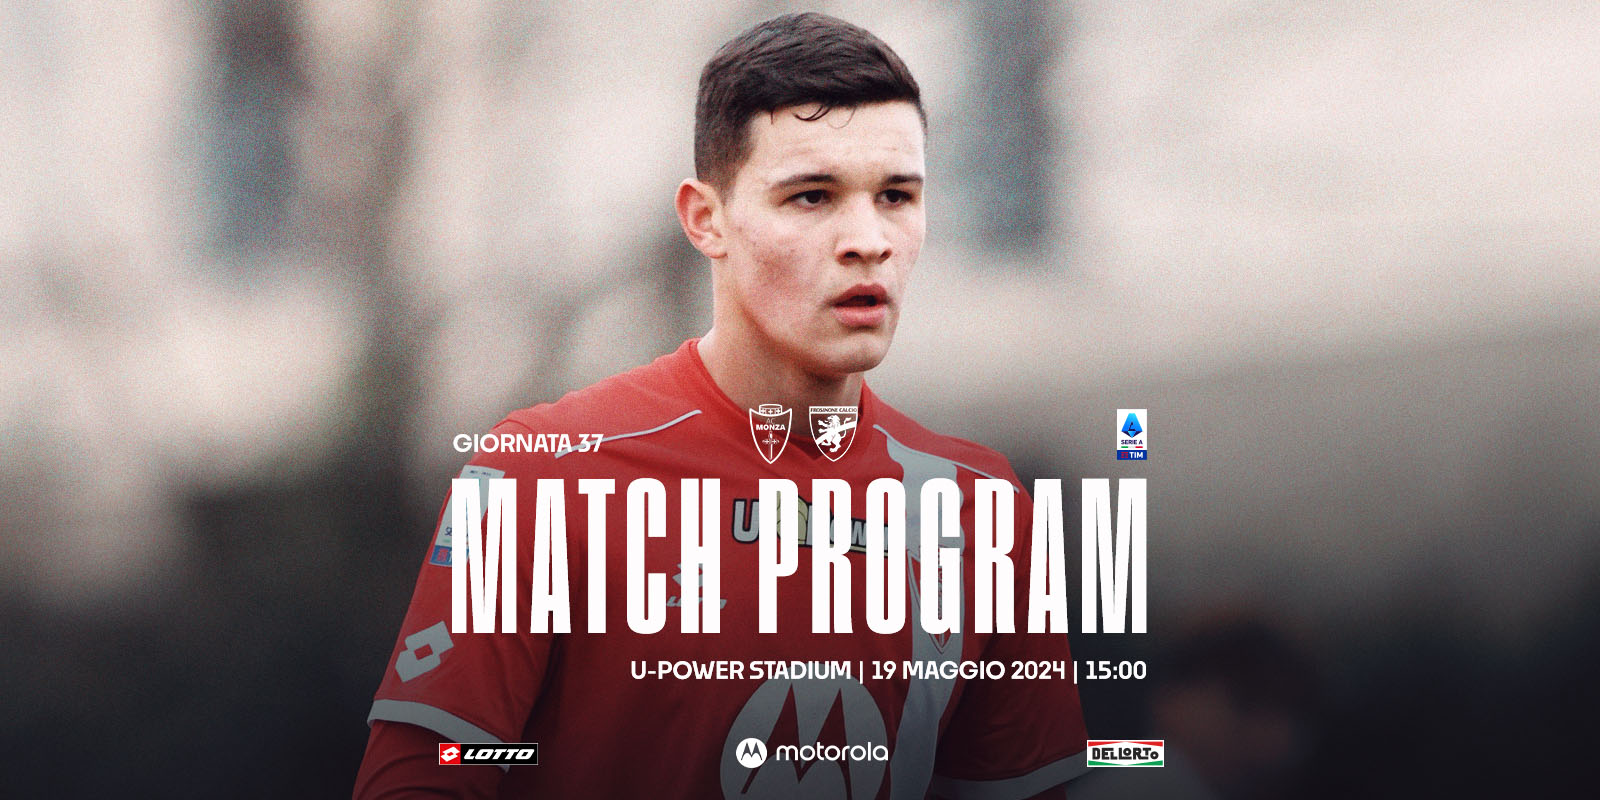 Monza - Frosinone: Match Program